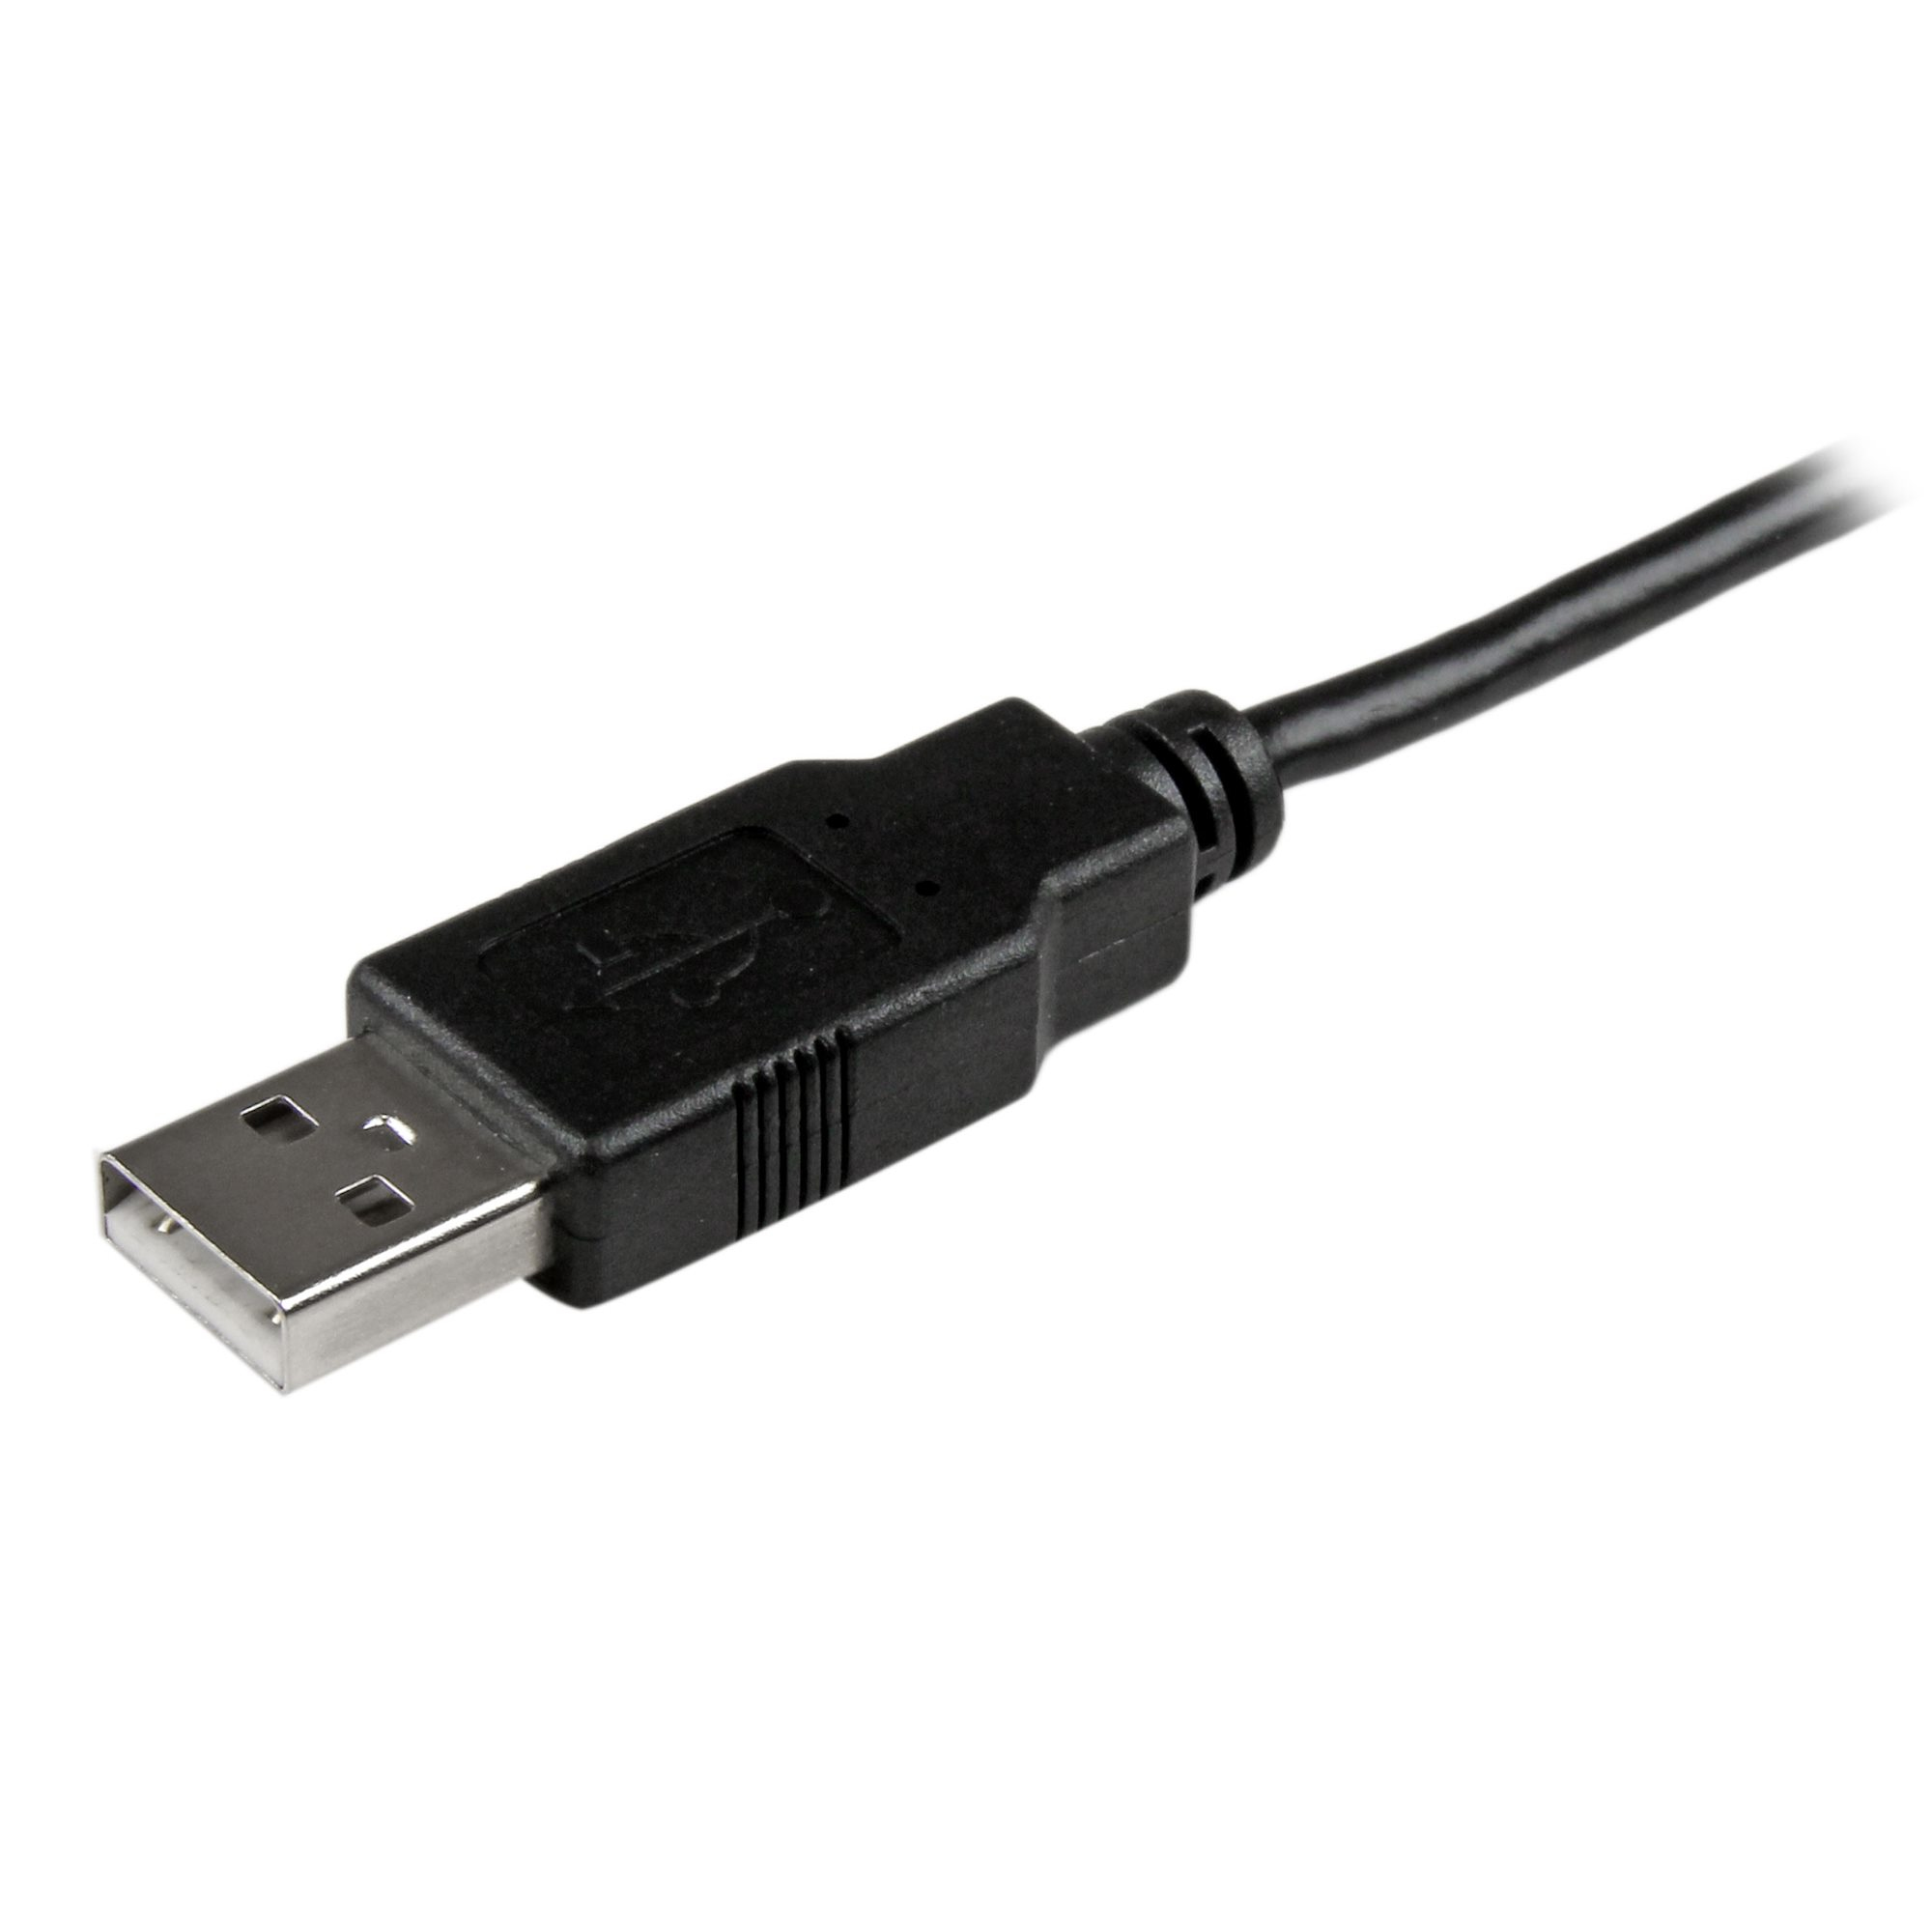 StarTech.com 1m Micro USB Ladekabel für Android Smartphones und Tablets - USB A auf Micro B Kabel / Datenkabel / Anschlusskabel - USB-Kabel - Micro-USB Typ B (M)